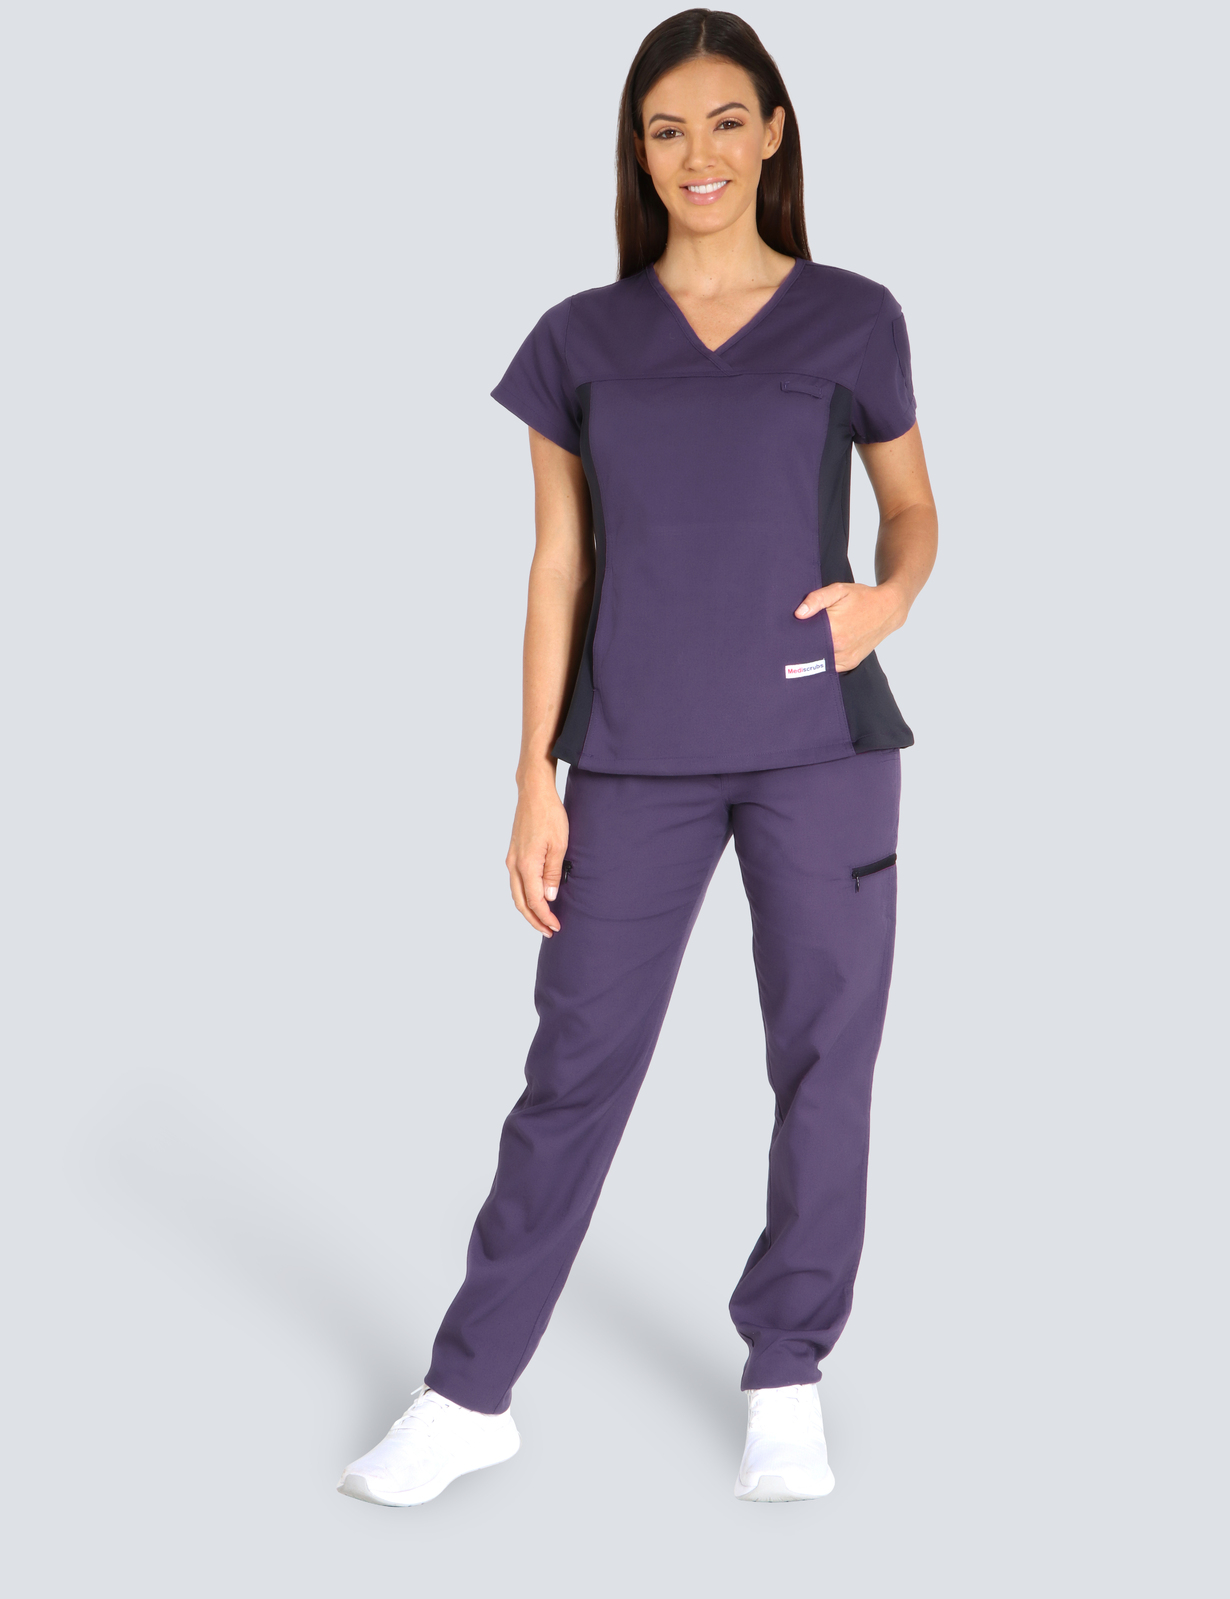 Toowoomba Hospital Pharmacist Interns Uniform Set Bundle (Women's Fit Spandex Top and Cargo pants in Aubergine + Logo) 